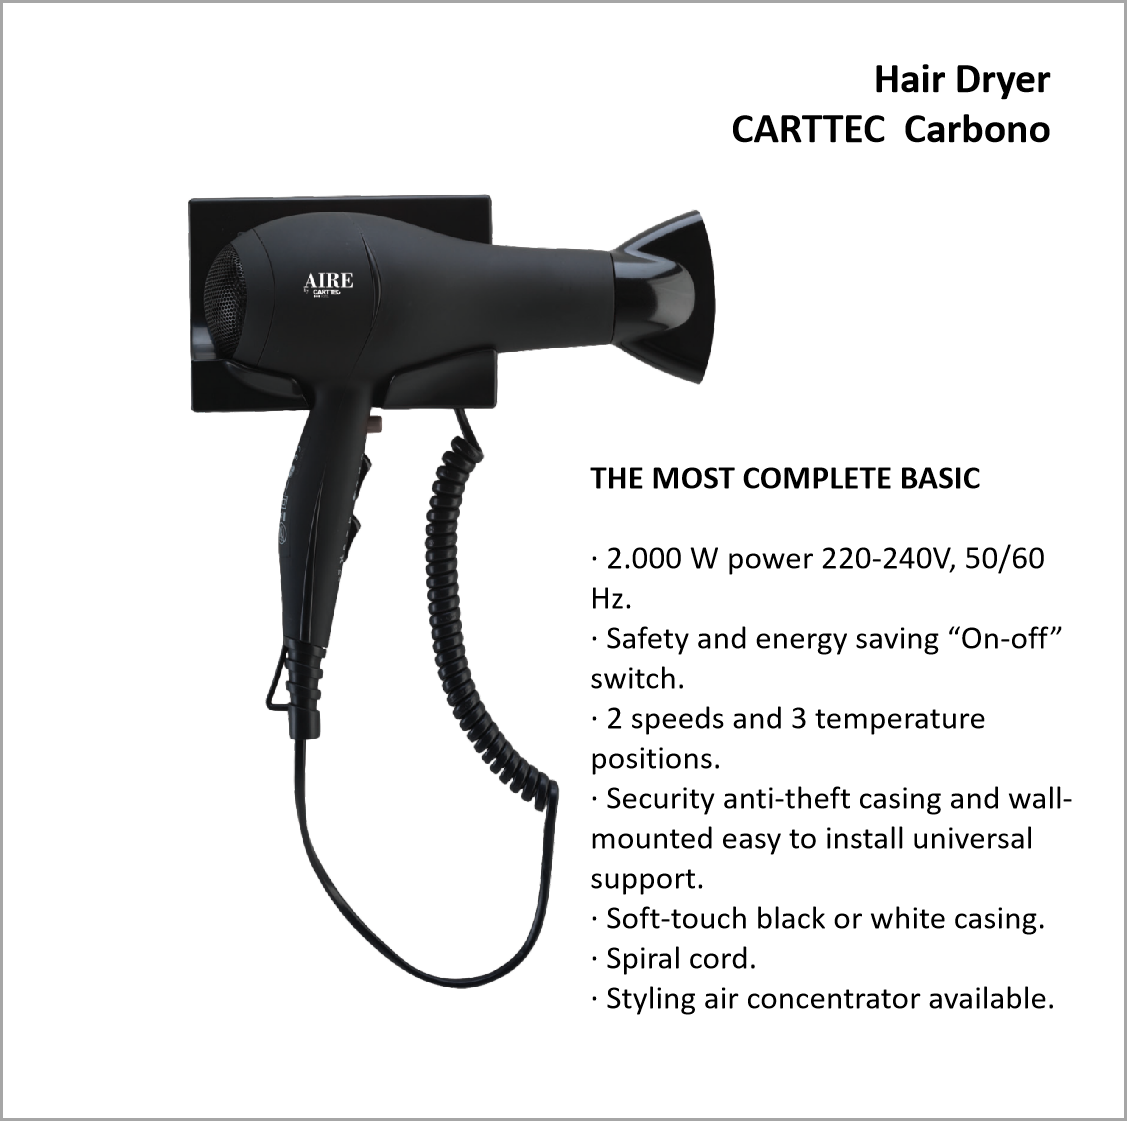 Debaf - CARTTEC Carbono Hair Dryer